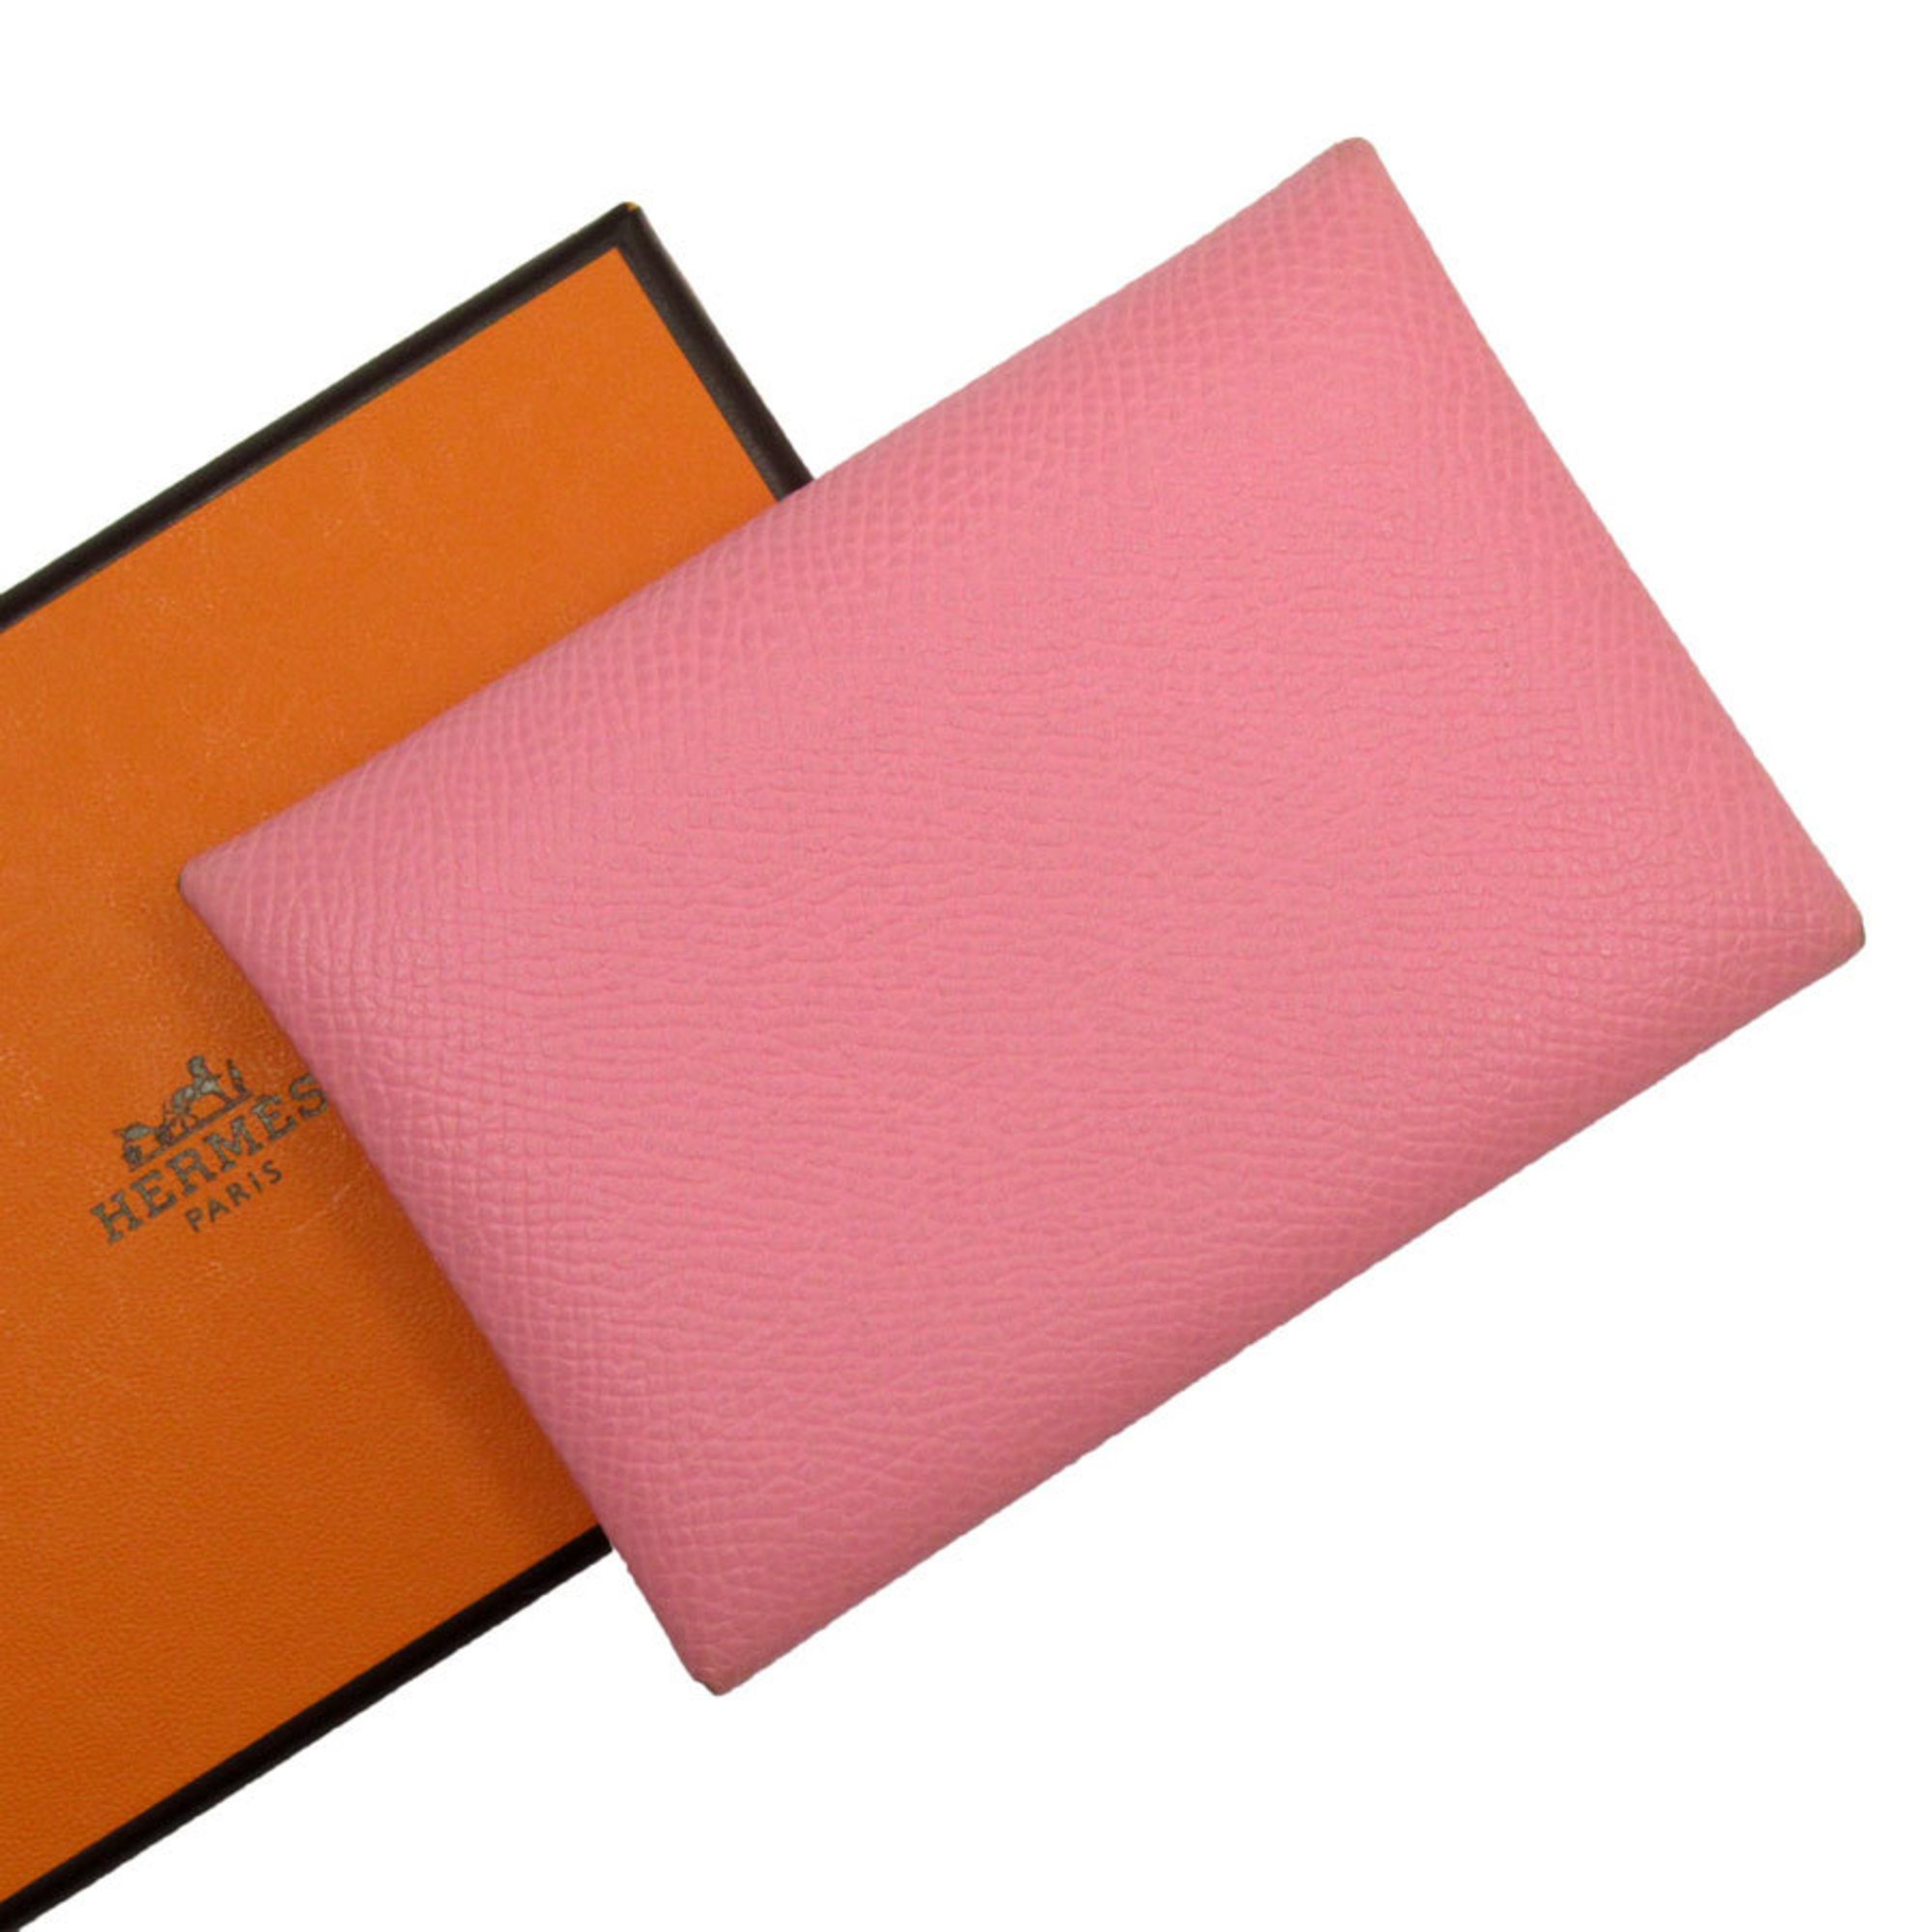 Hermes HERMES Business Card Holder/Card Case Wallet/Coin Calvi Duo Leather Light Pink Women's w0368g